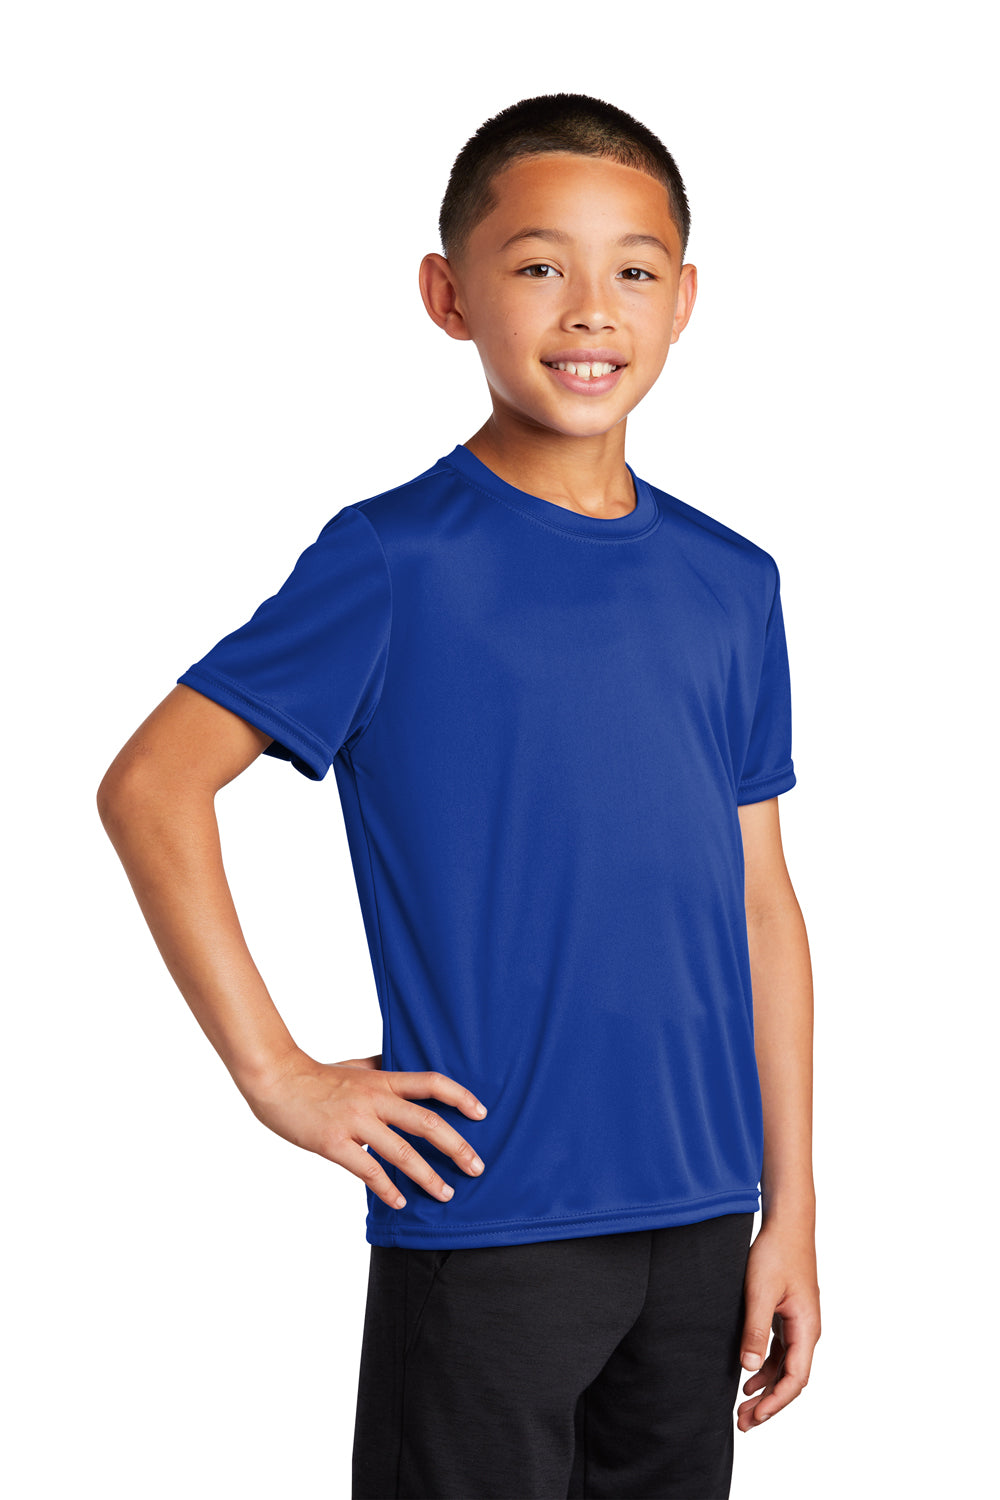 Port & Company PC380Y Youth Dry Zone Performance Moisture Wicking Short Sleeve Crewneck T-Shirt True Royal Blue 3Q